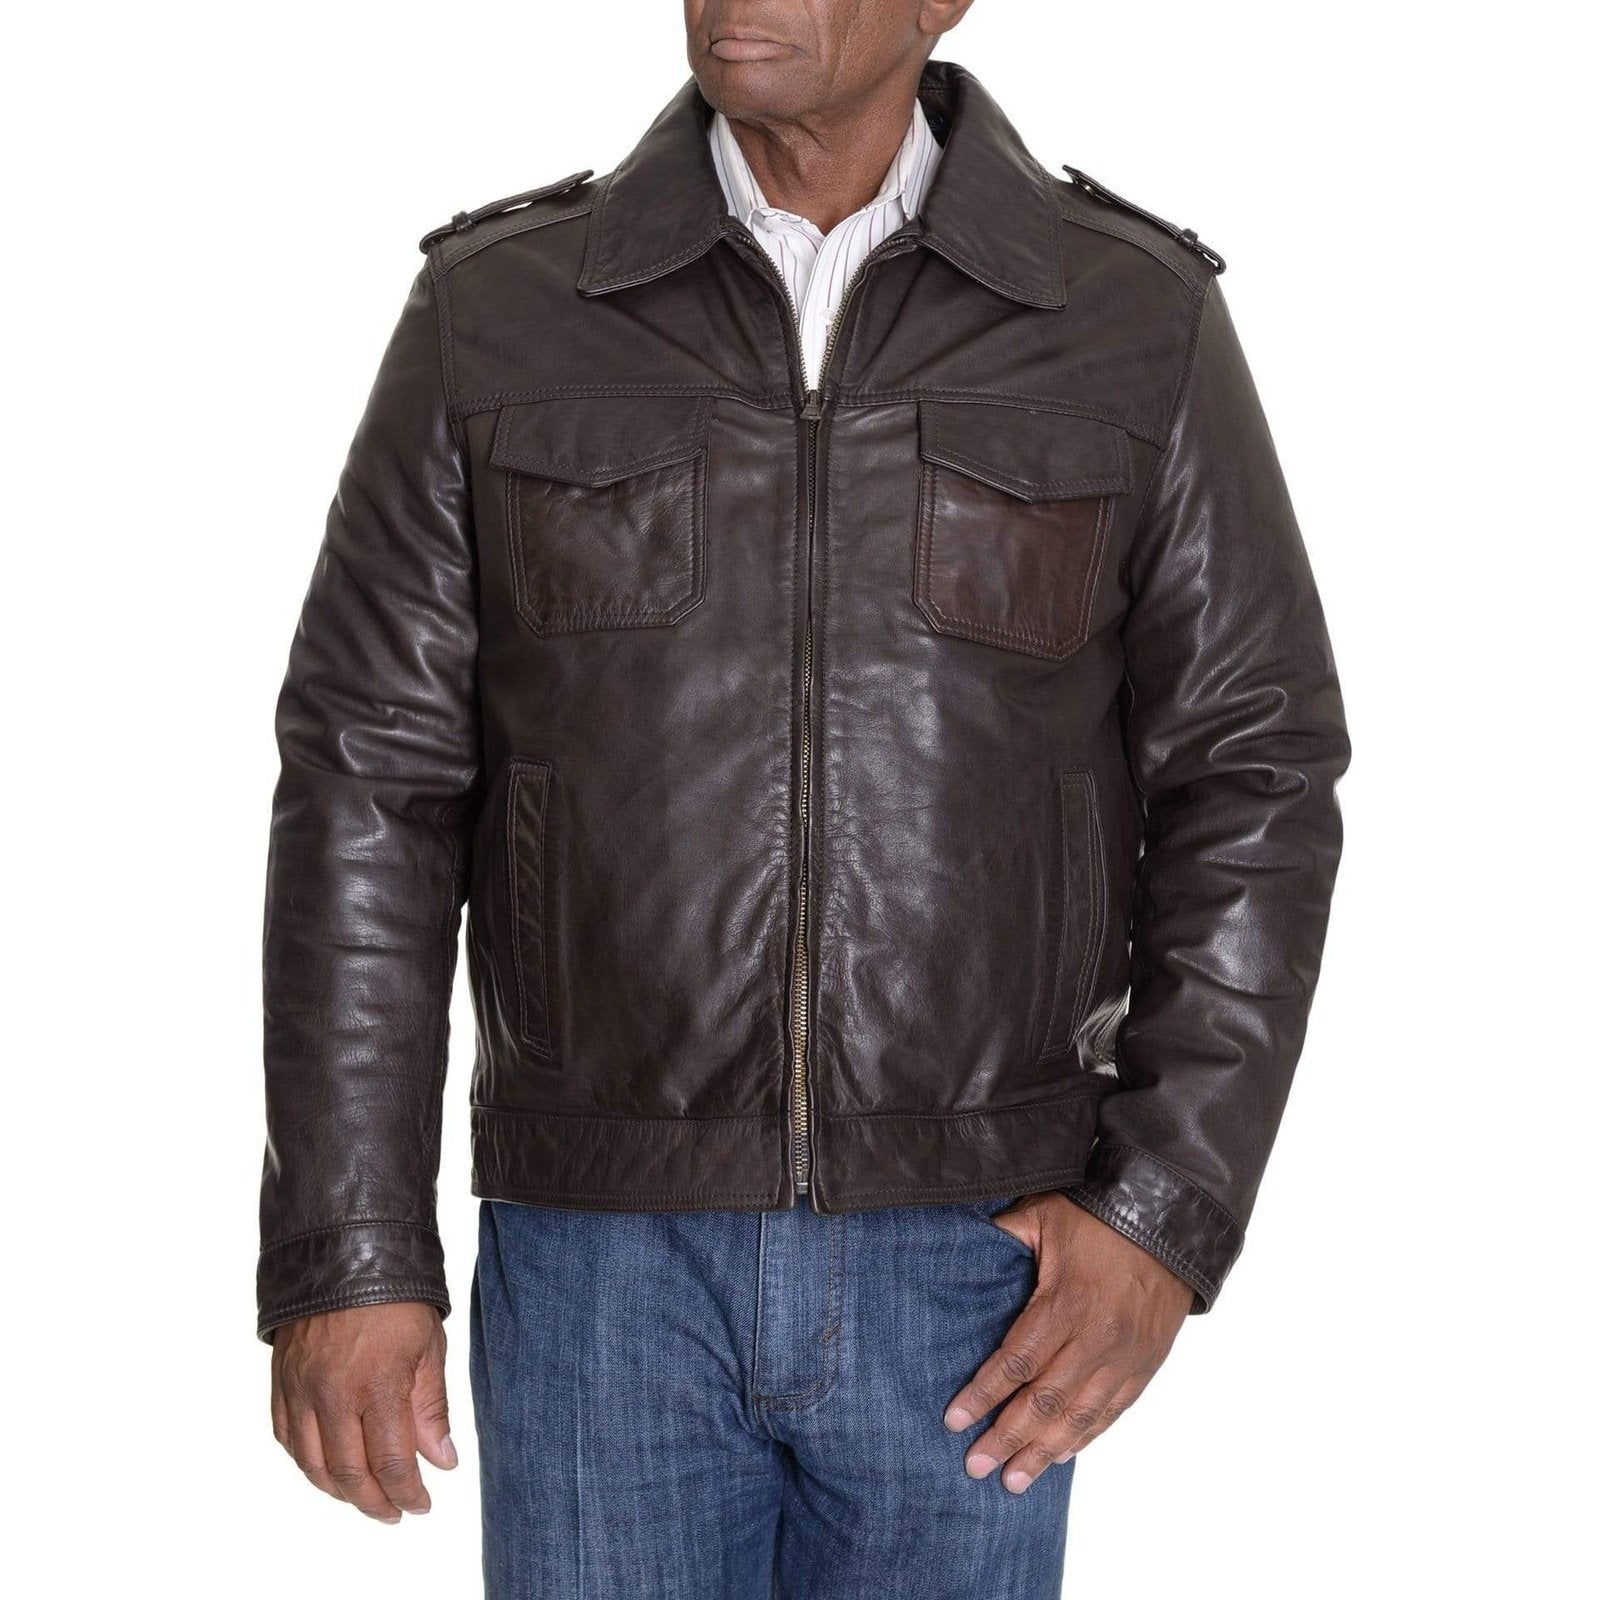 Tommy Hilfiger Solid Brown Genuine Leather Jacket With Shoulder Epaule